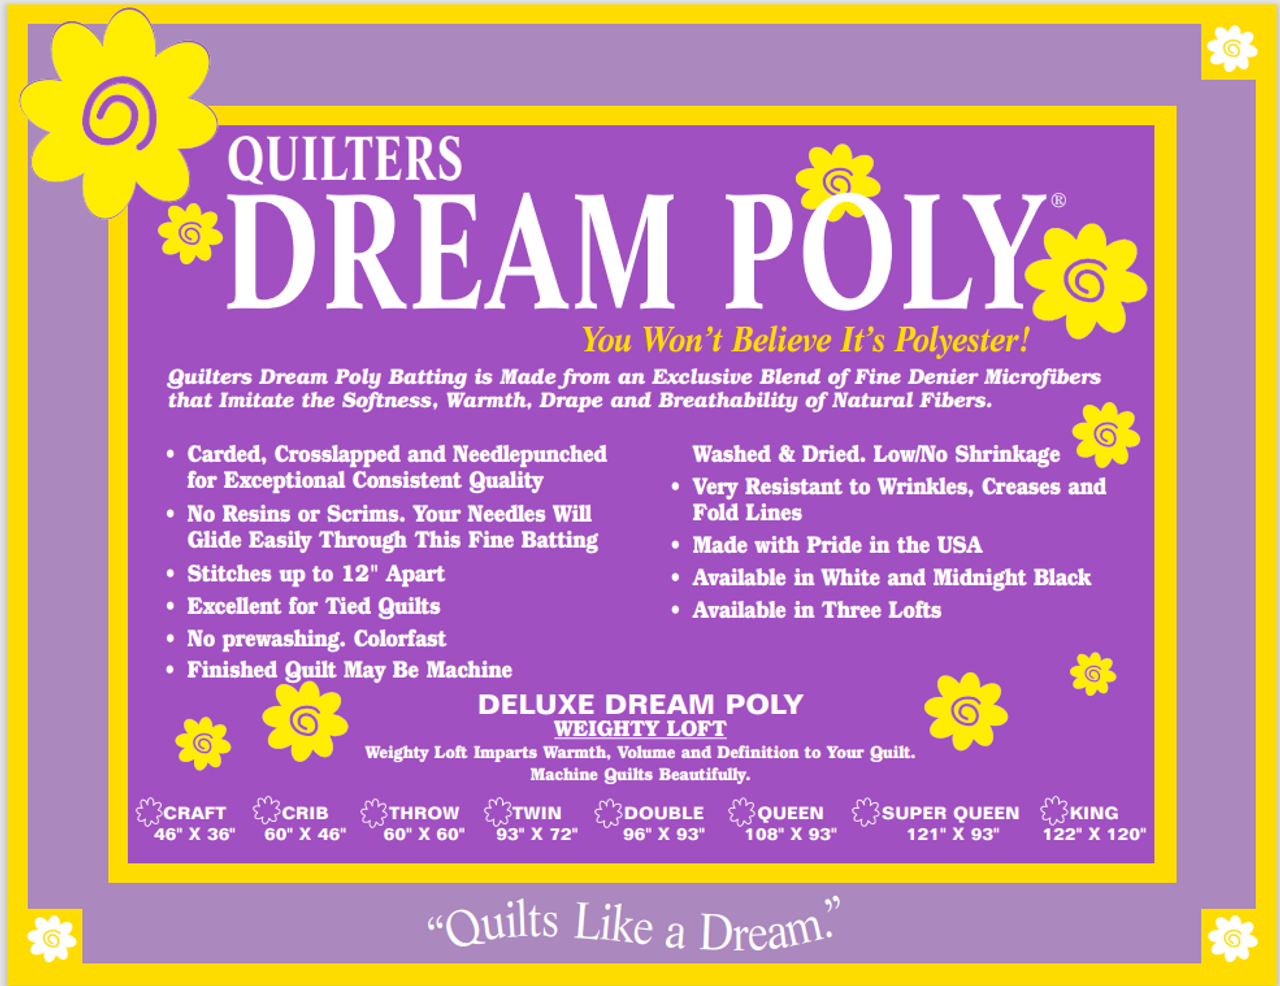 Quilters Dream Deluxe Cotton Batting - Crib Size - Fat Quarter Gypsy Shop